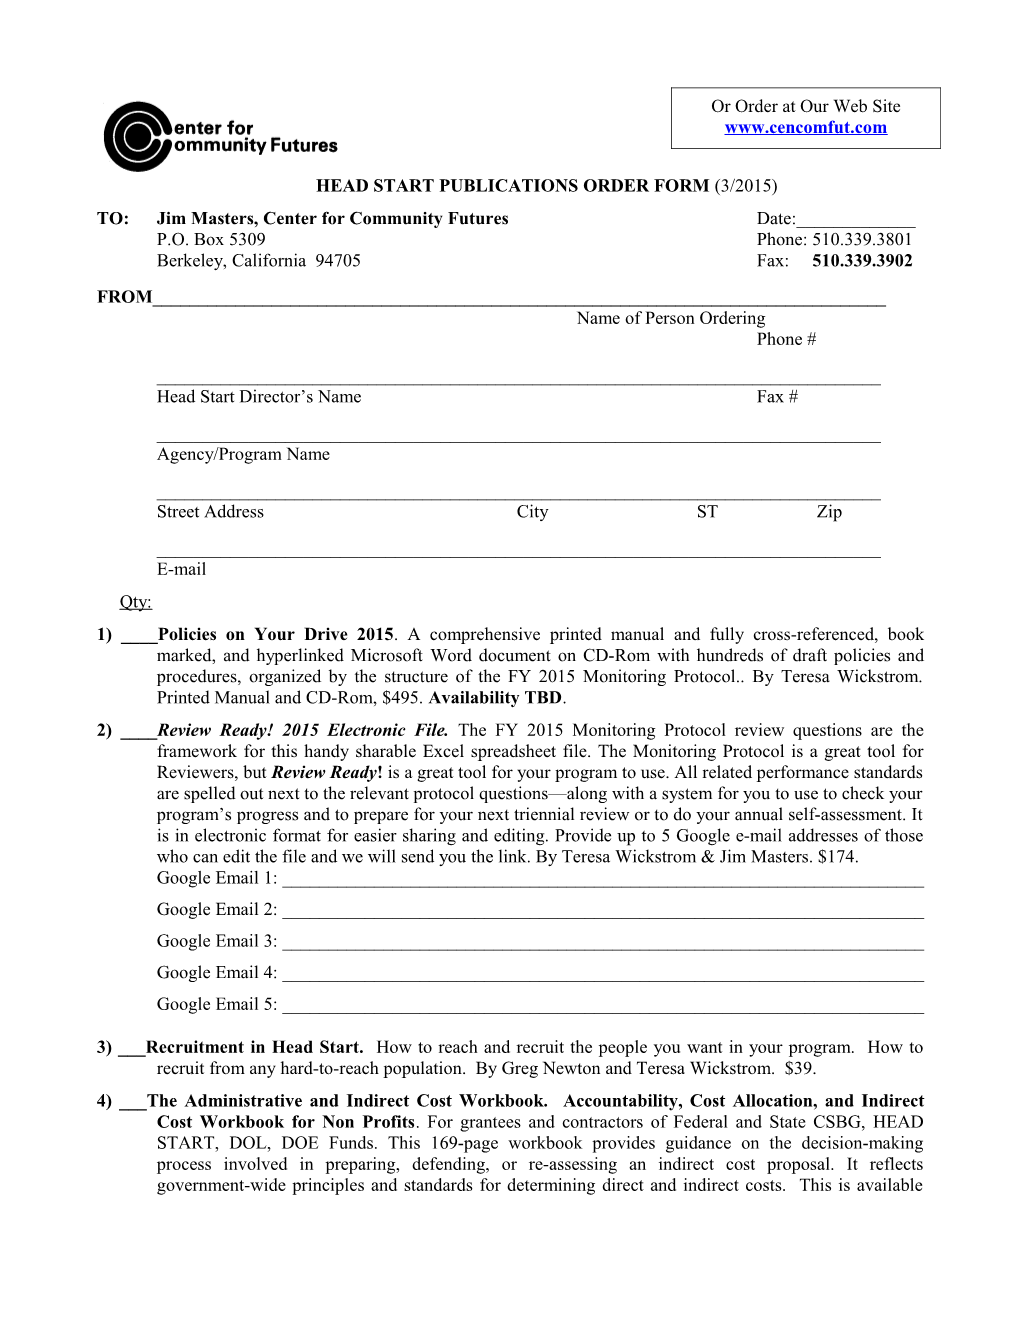 Head Start Publications Order Form (4/06)